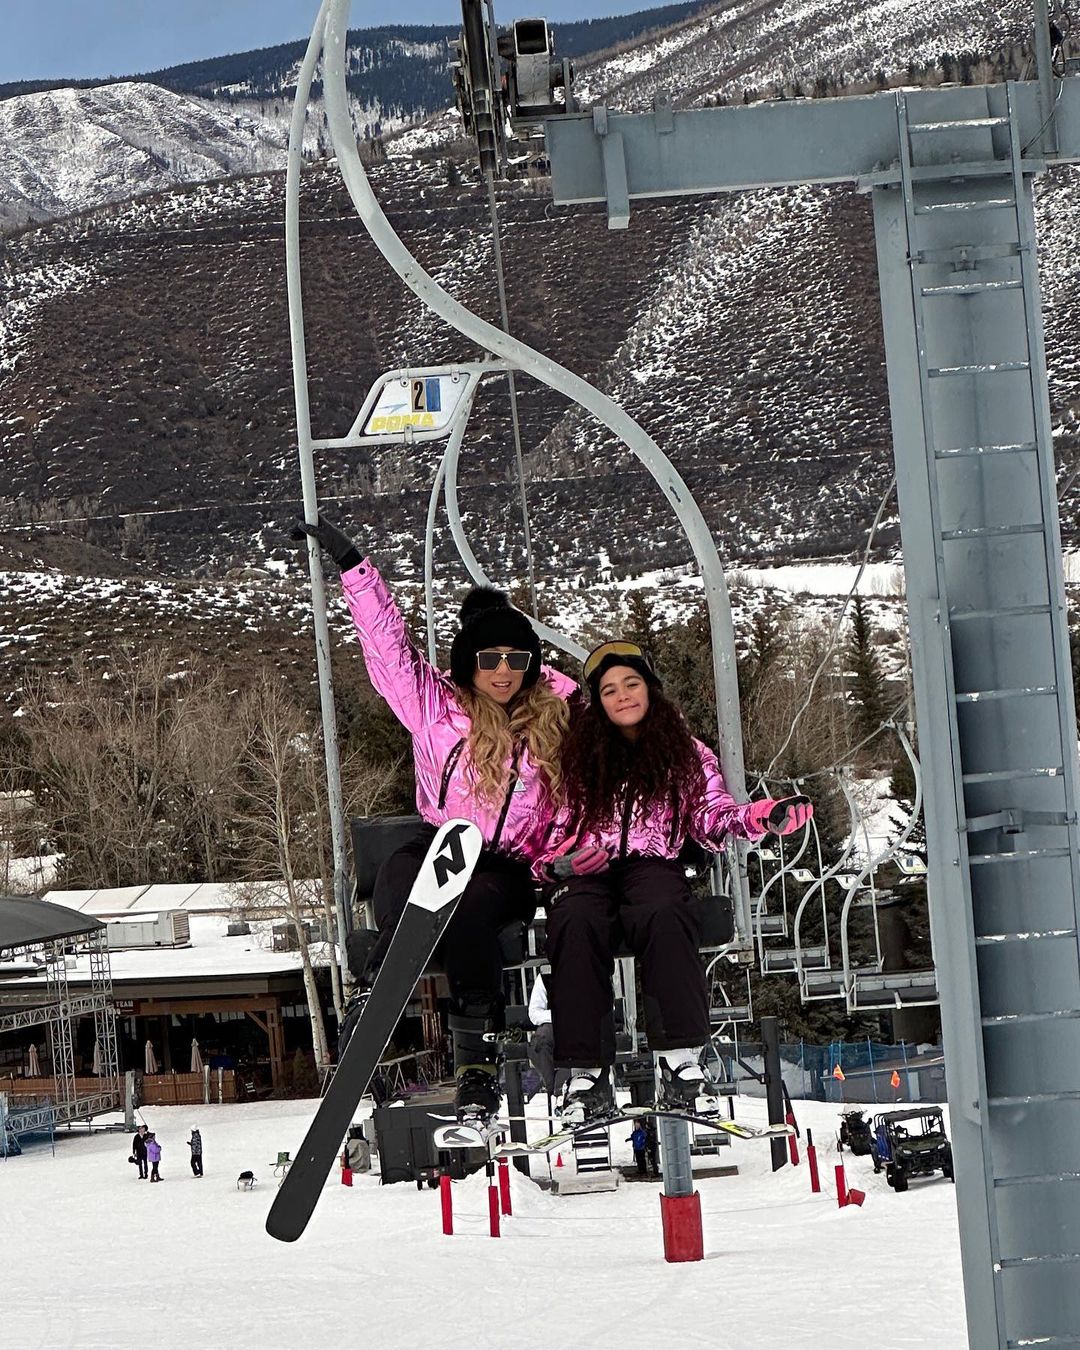 Family look: Мэрайя Кэри с дочерью на горнолыжном курорте